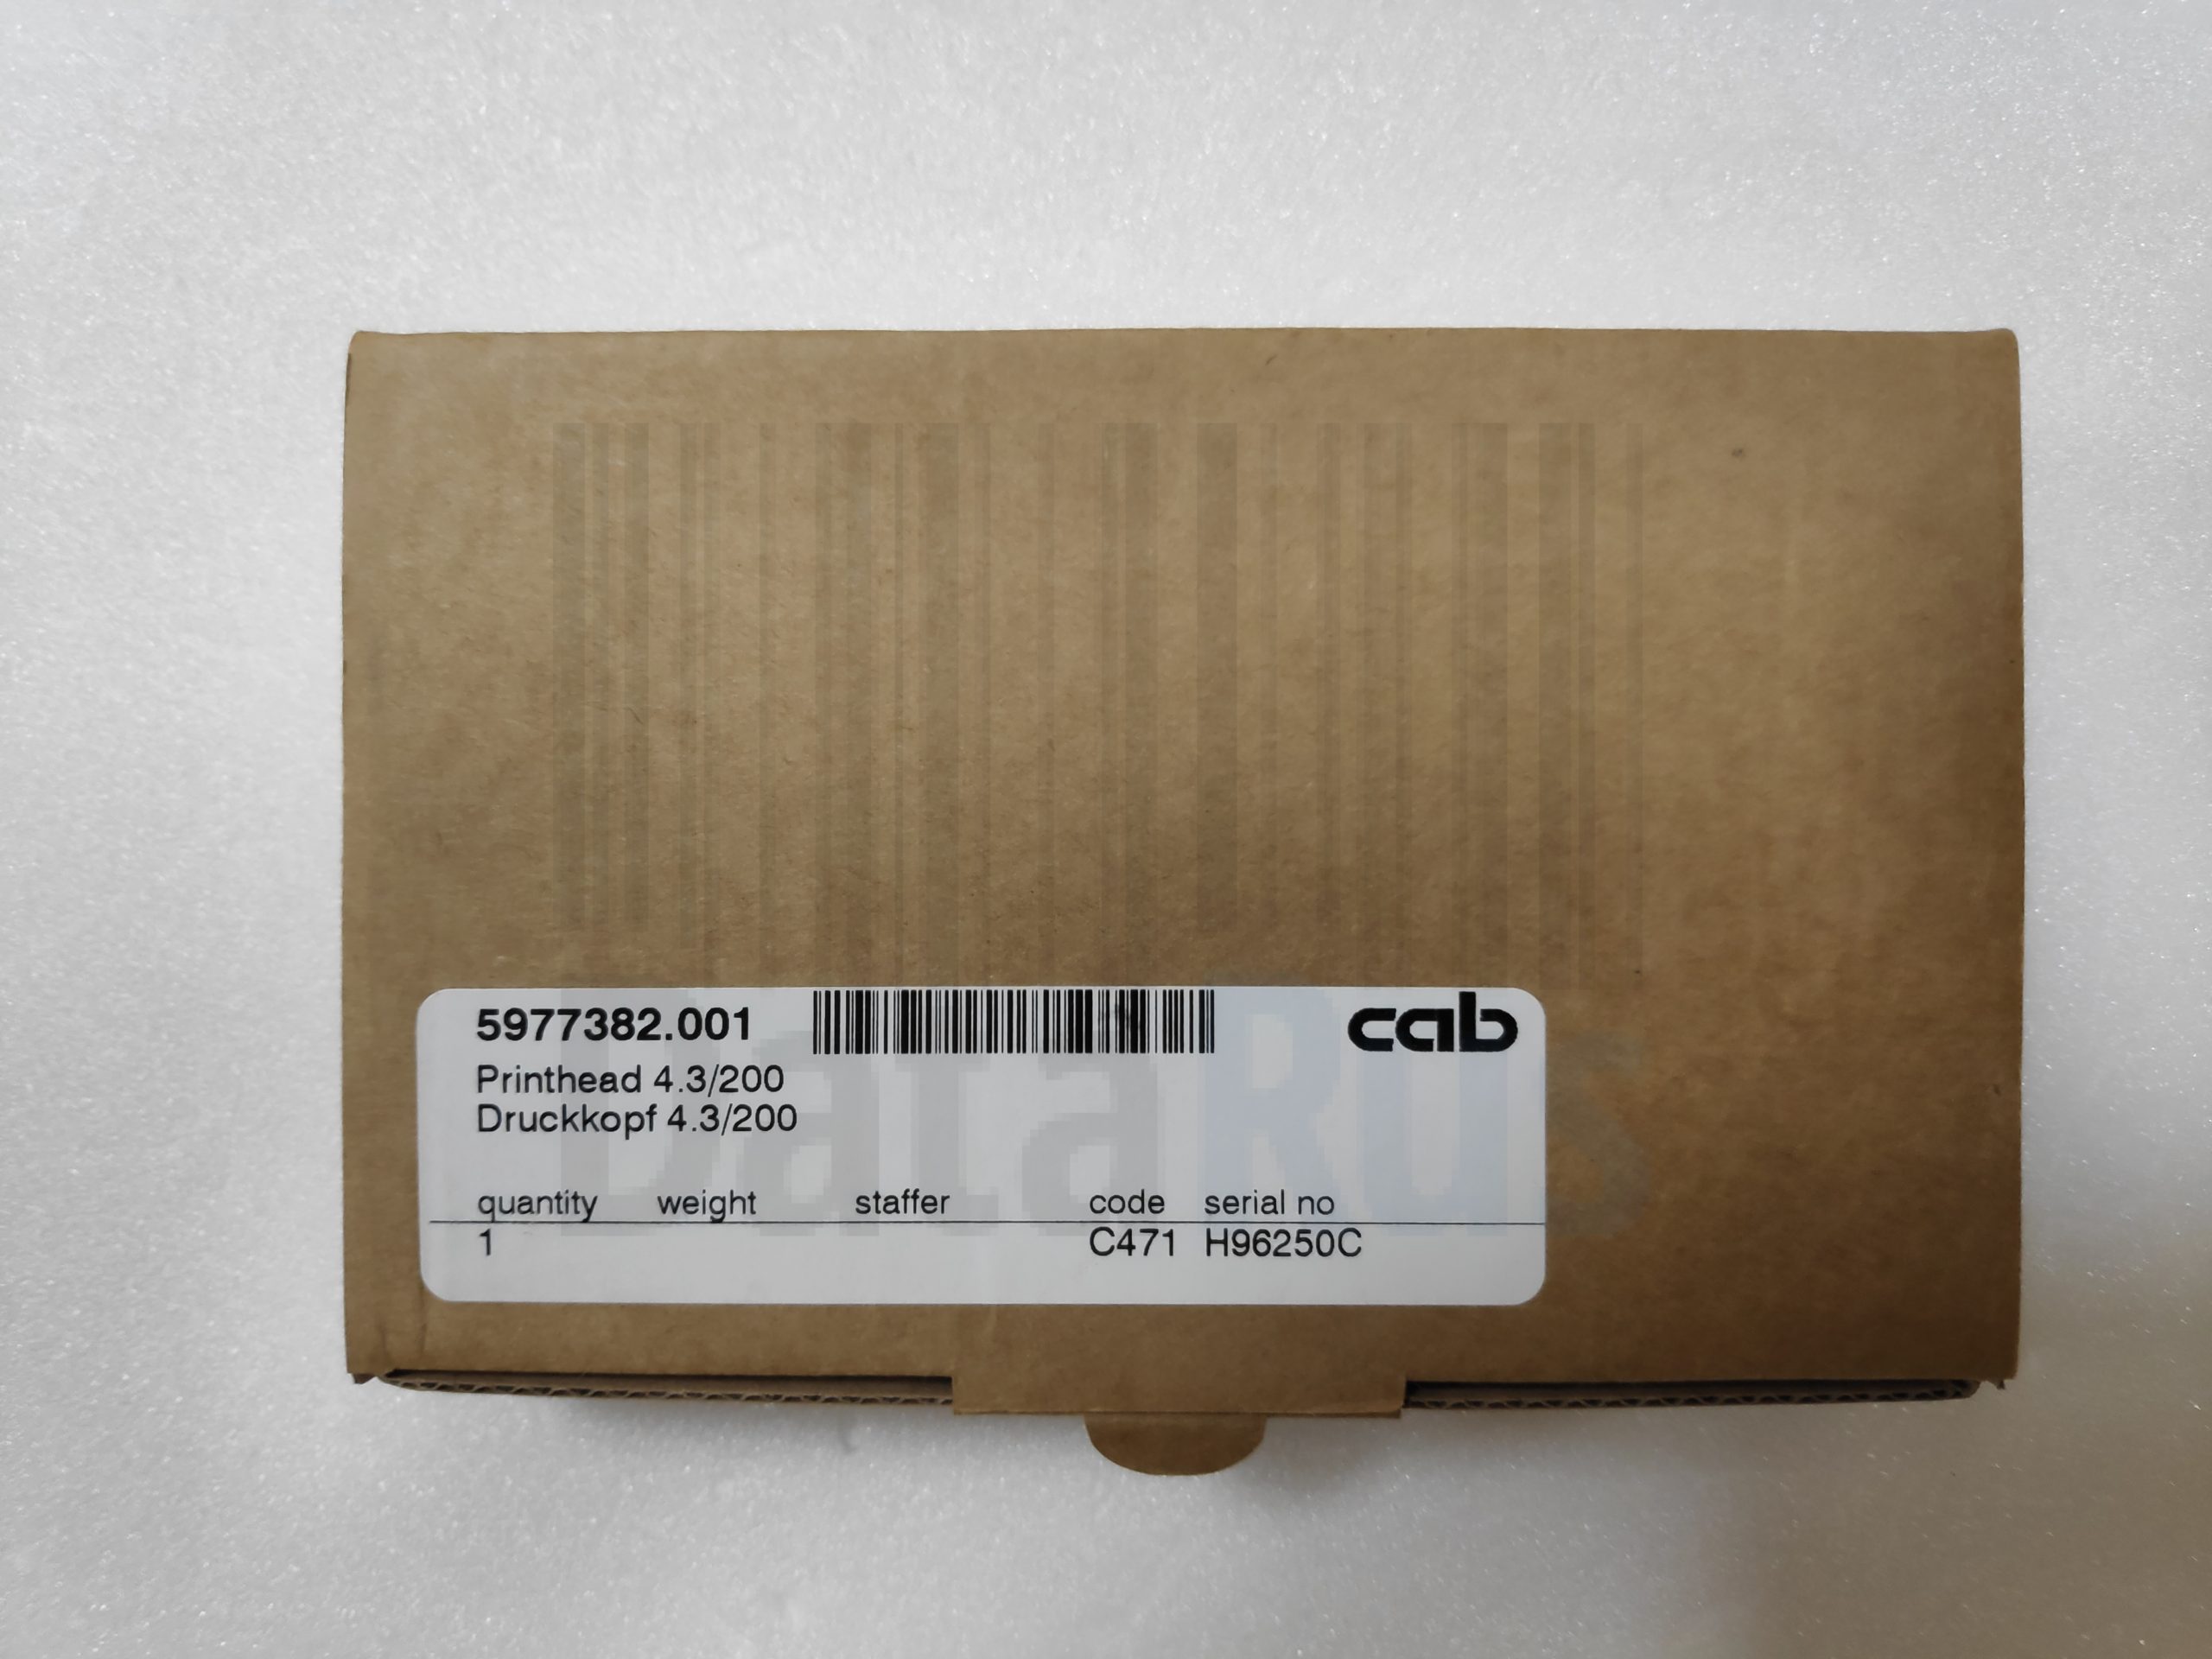 Термоголовка Cab 4.3, 5977382.001, (108 Mm) – 200 DPI. коробка